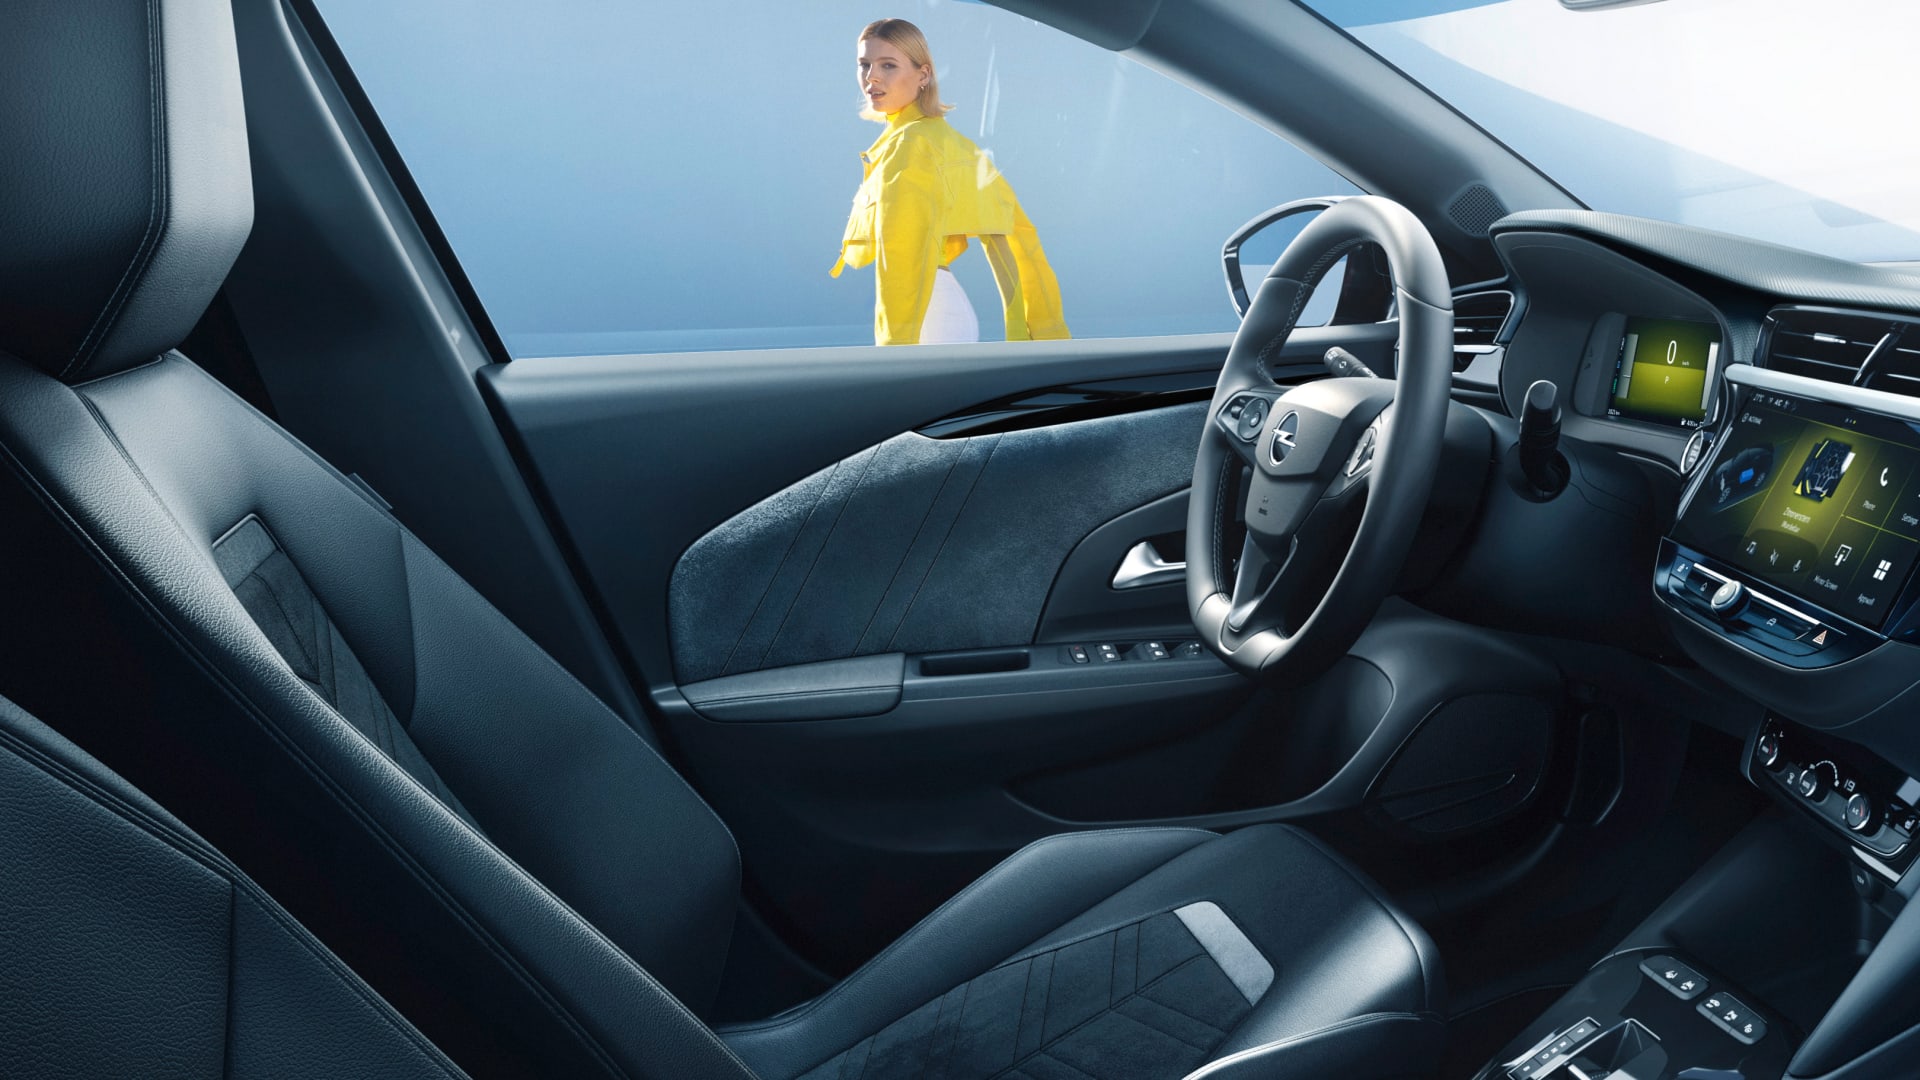 Corsa Electric - Opel Detox 2.0 Experience